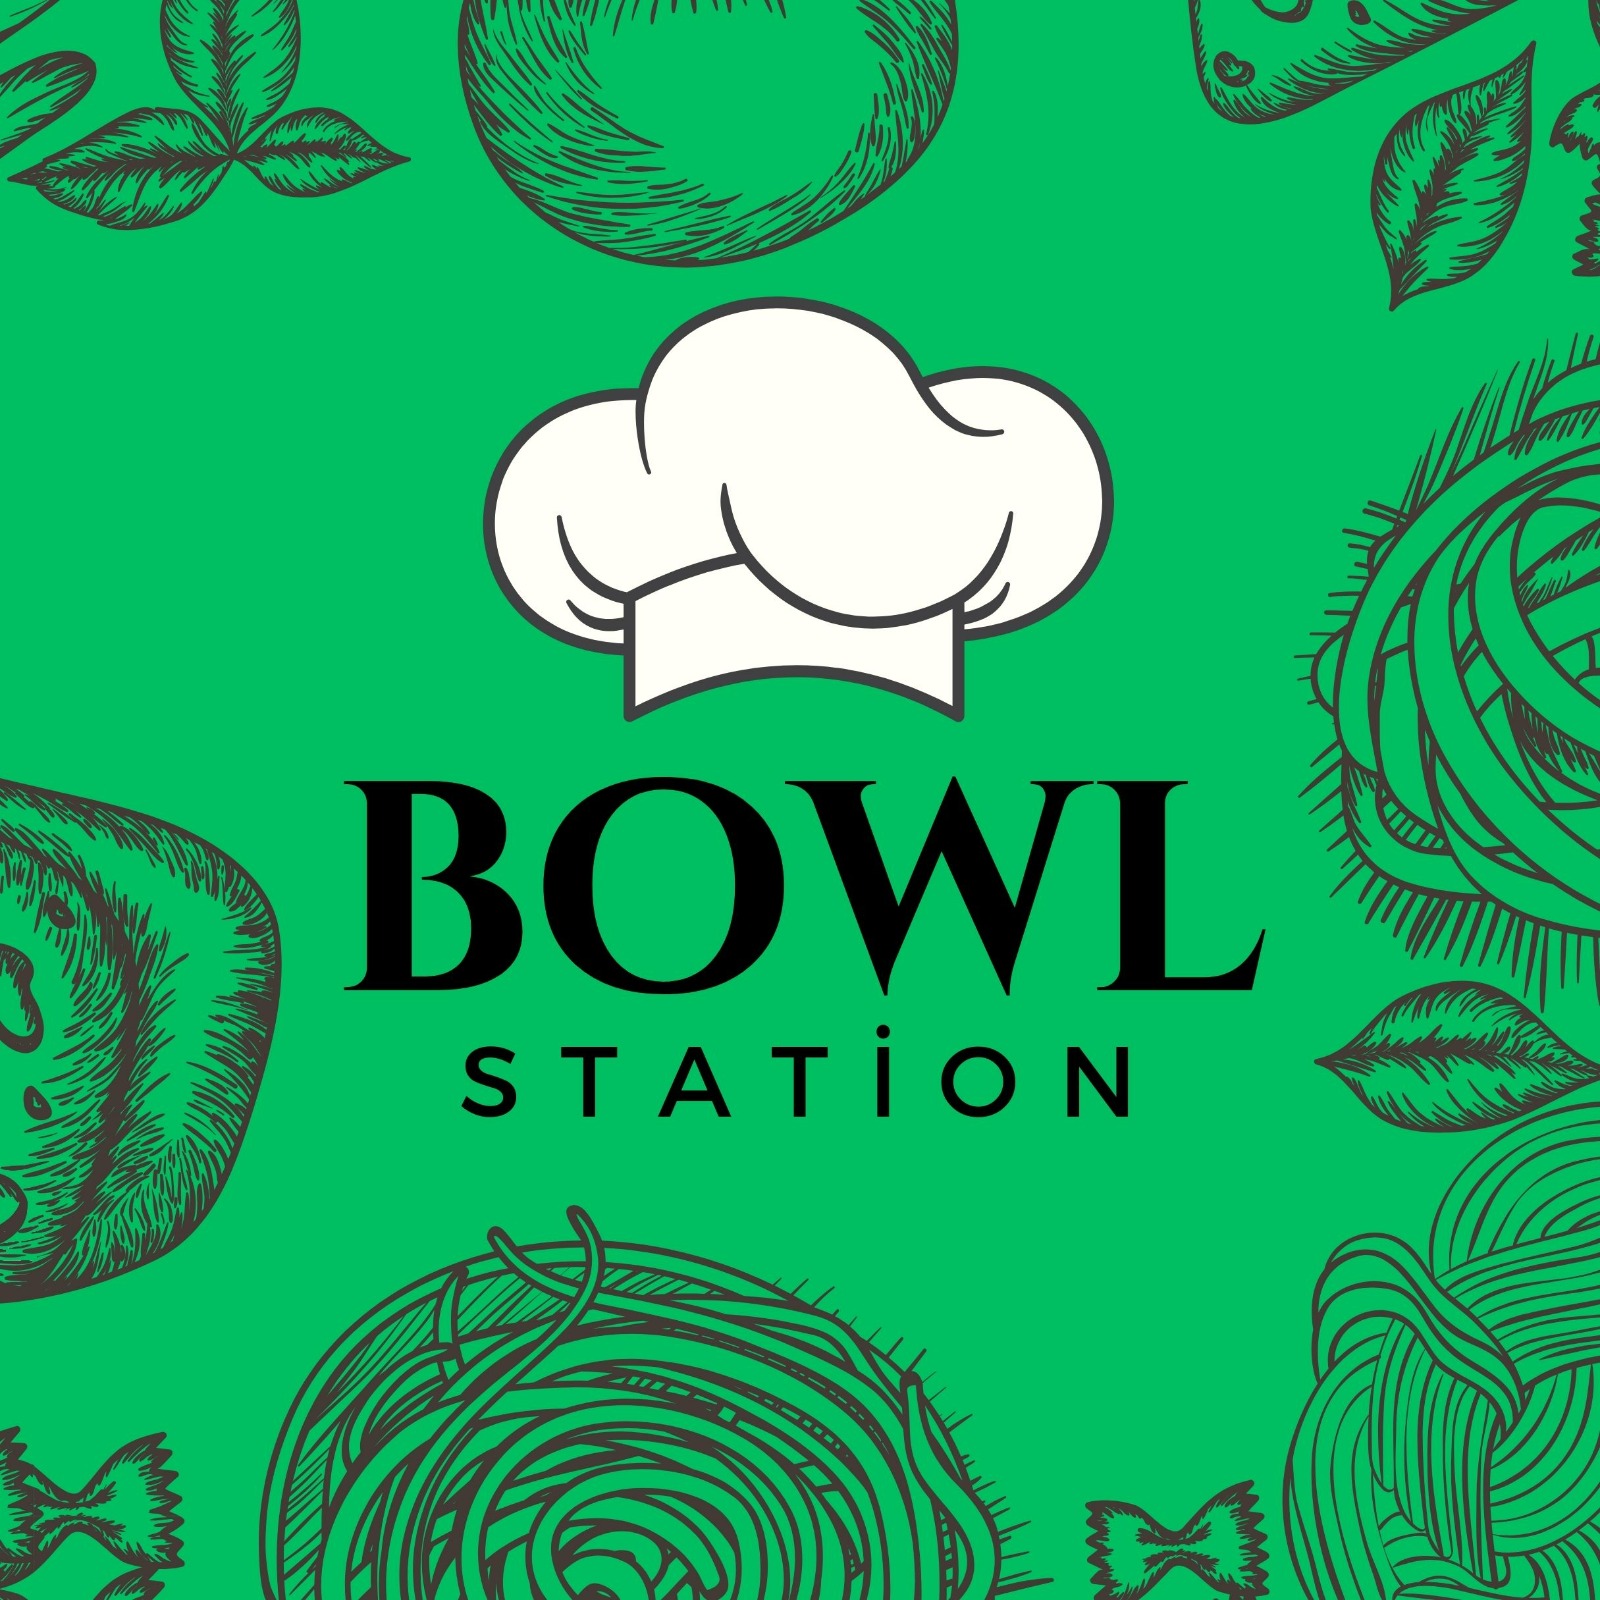 Bowl Station